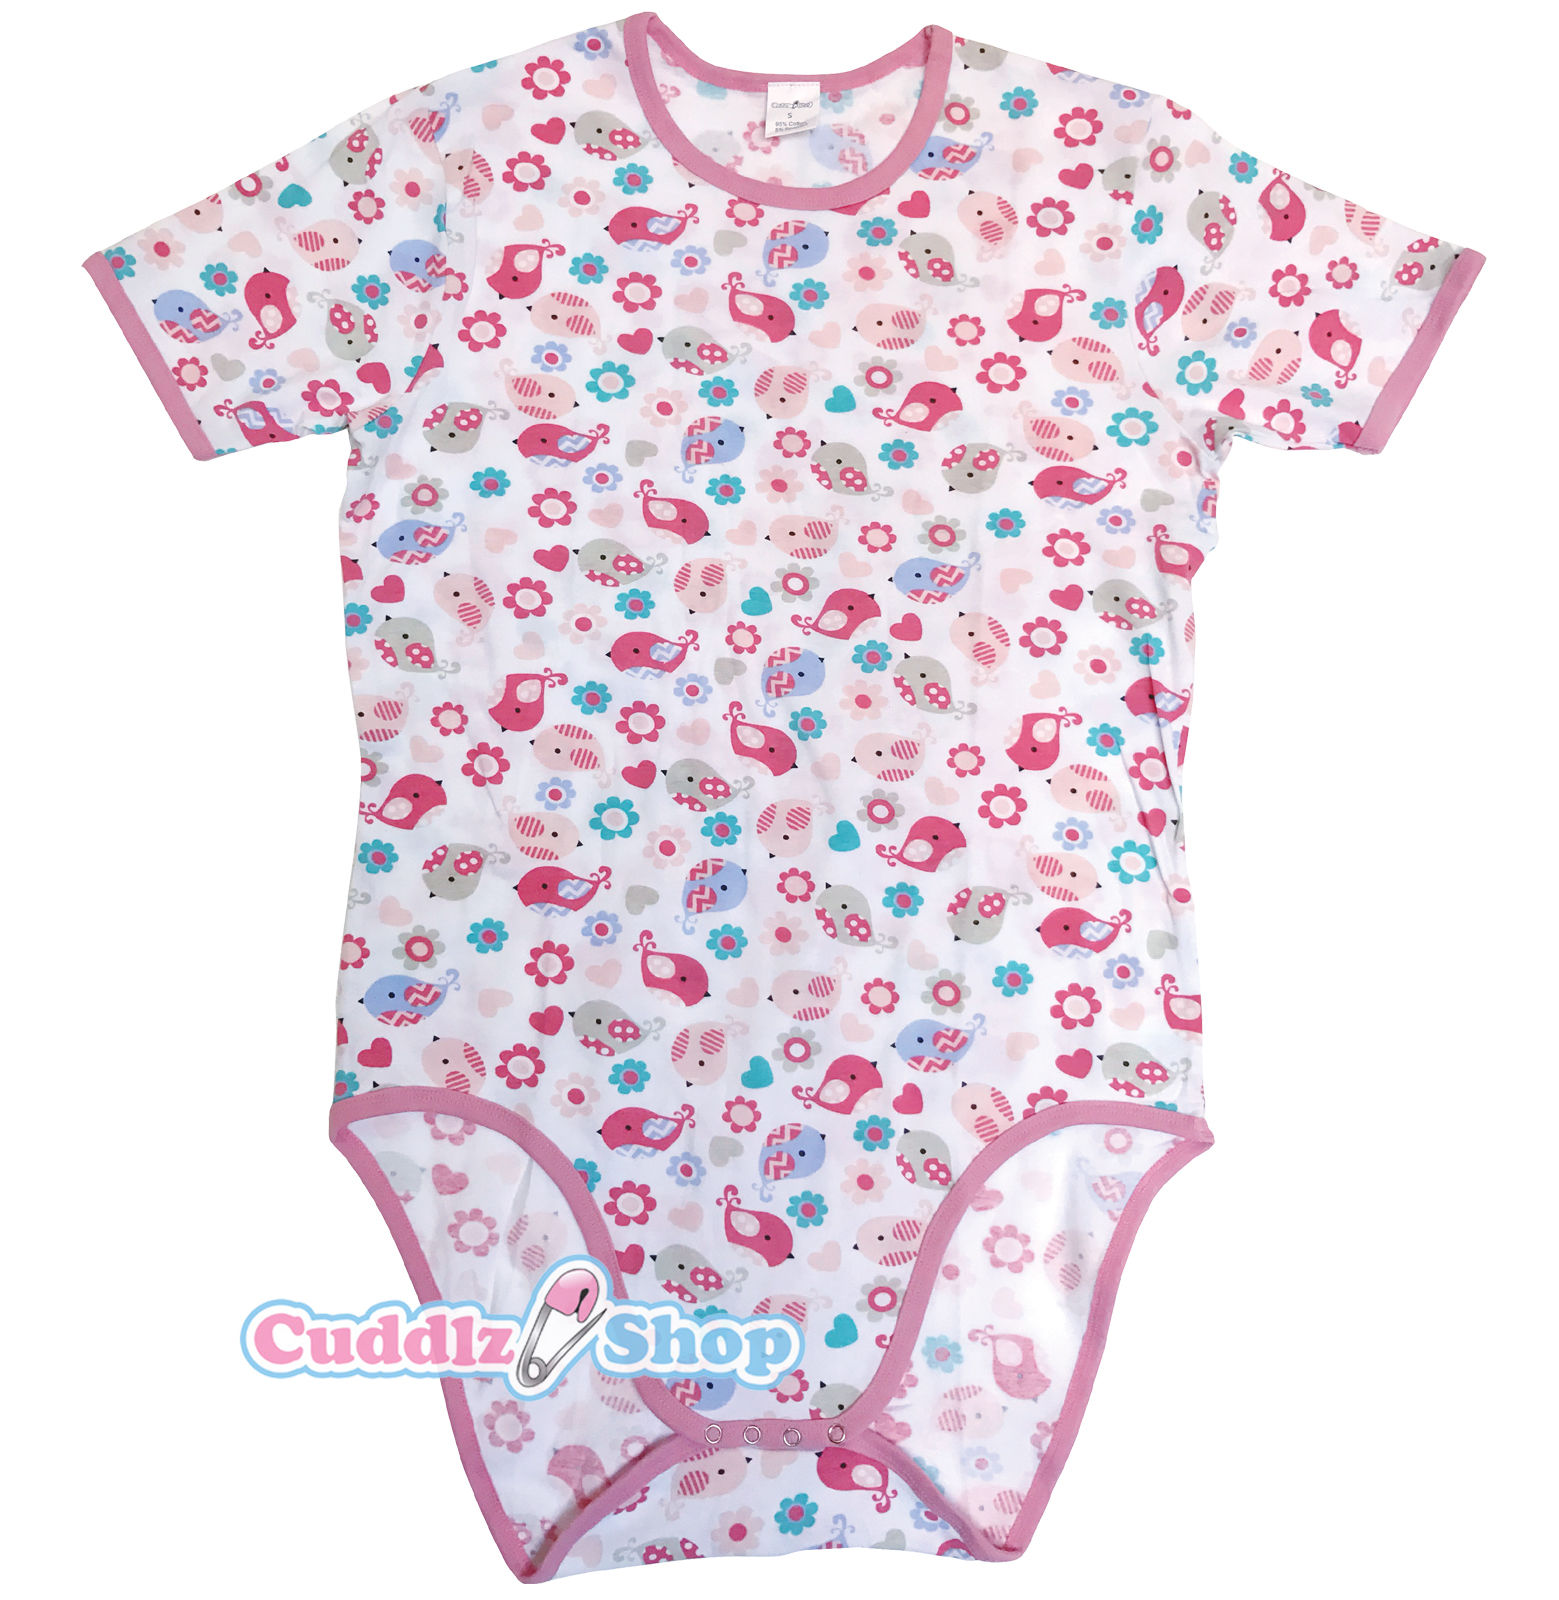 Cuddlz Pink Birds Pattern Cotton Stretch Adult Baby Grow Romper ABDL Body Suit